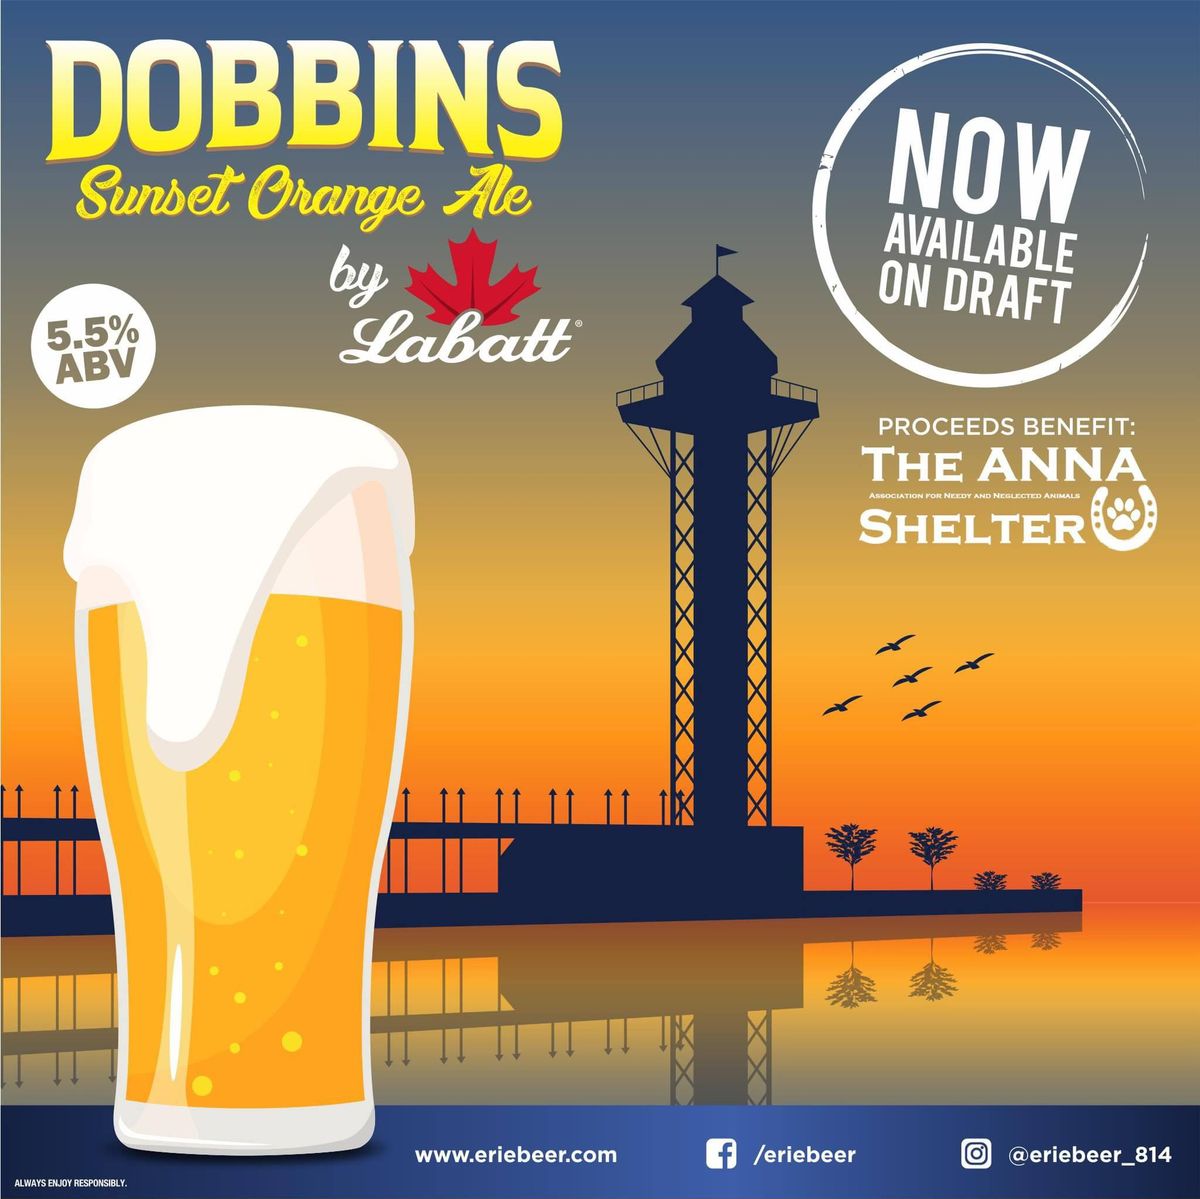 ANNA Shelter Event - Featuring Dobbins Sunset Orange Ale